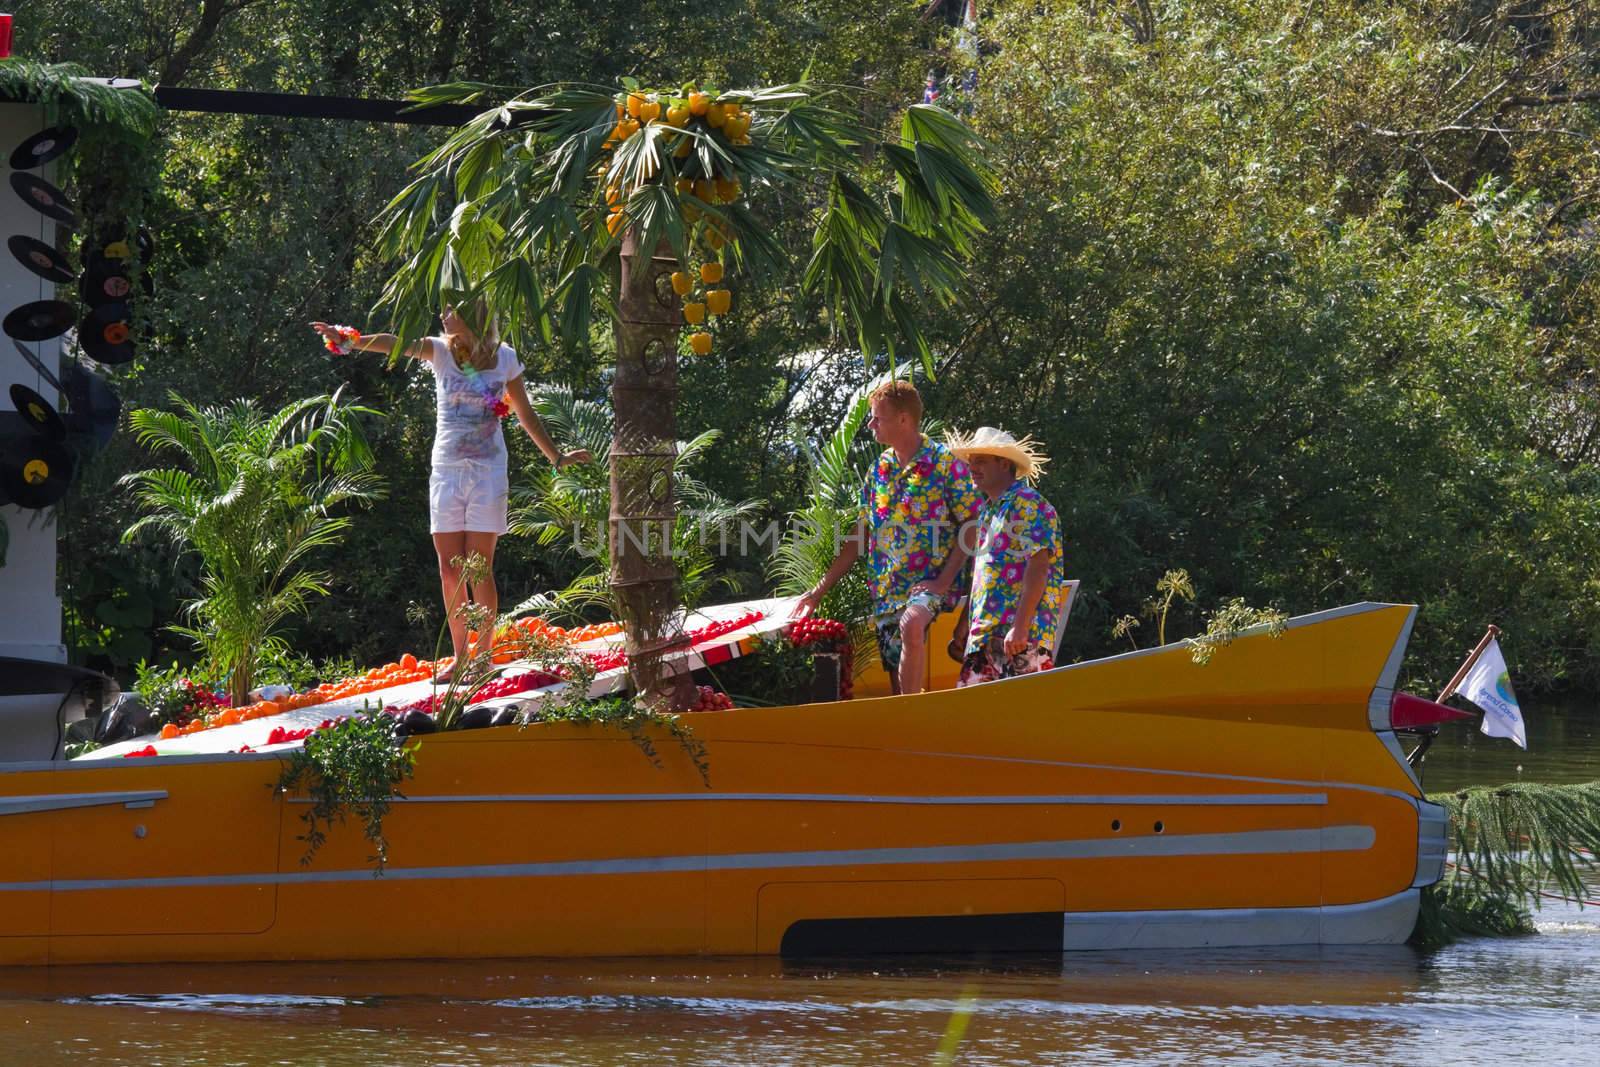 Westland Floating Flower Parade 2011, The Netherlands by Colette